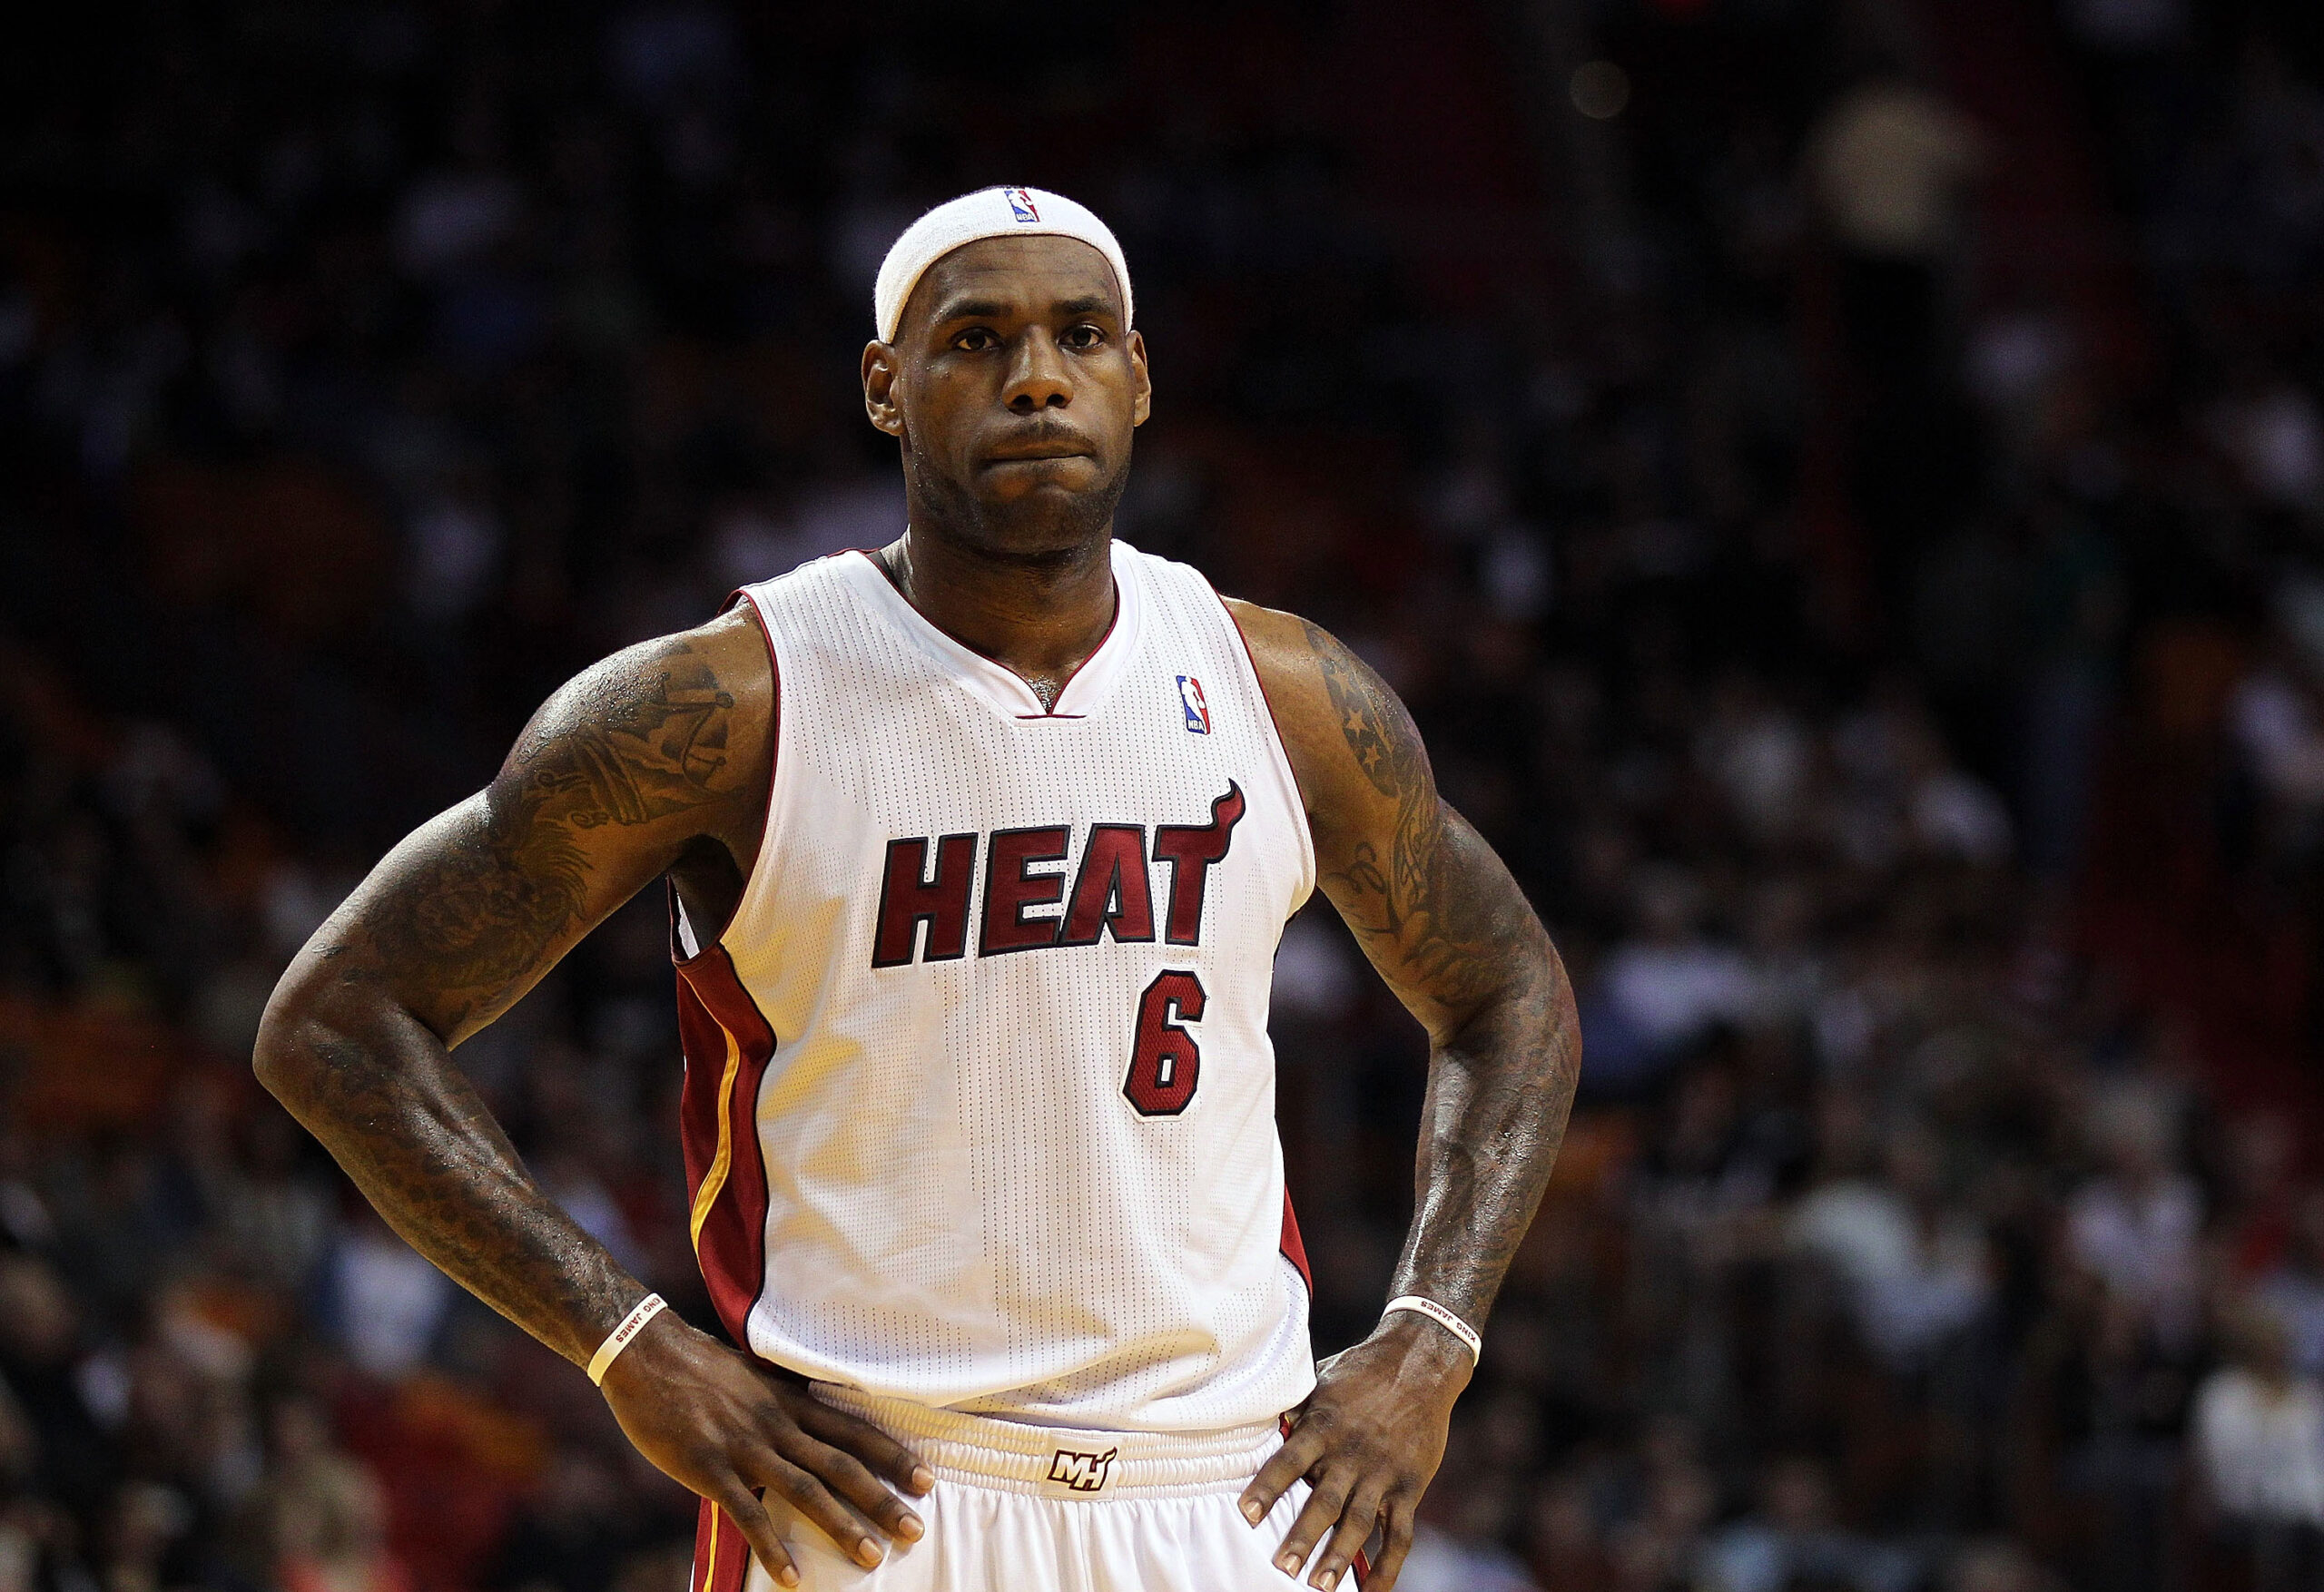 Breaking News: NBA Shocker: LeBron James in Jaw-Dropping Mega Trade to Miami Heat